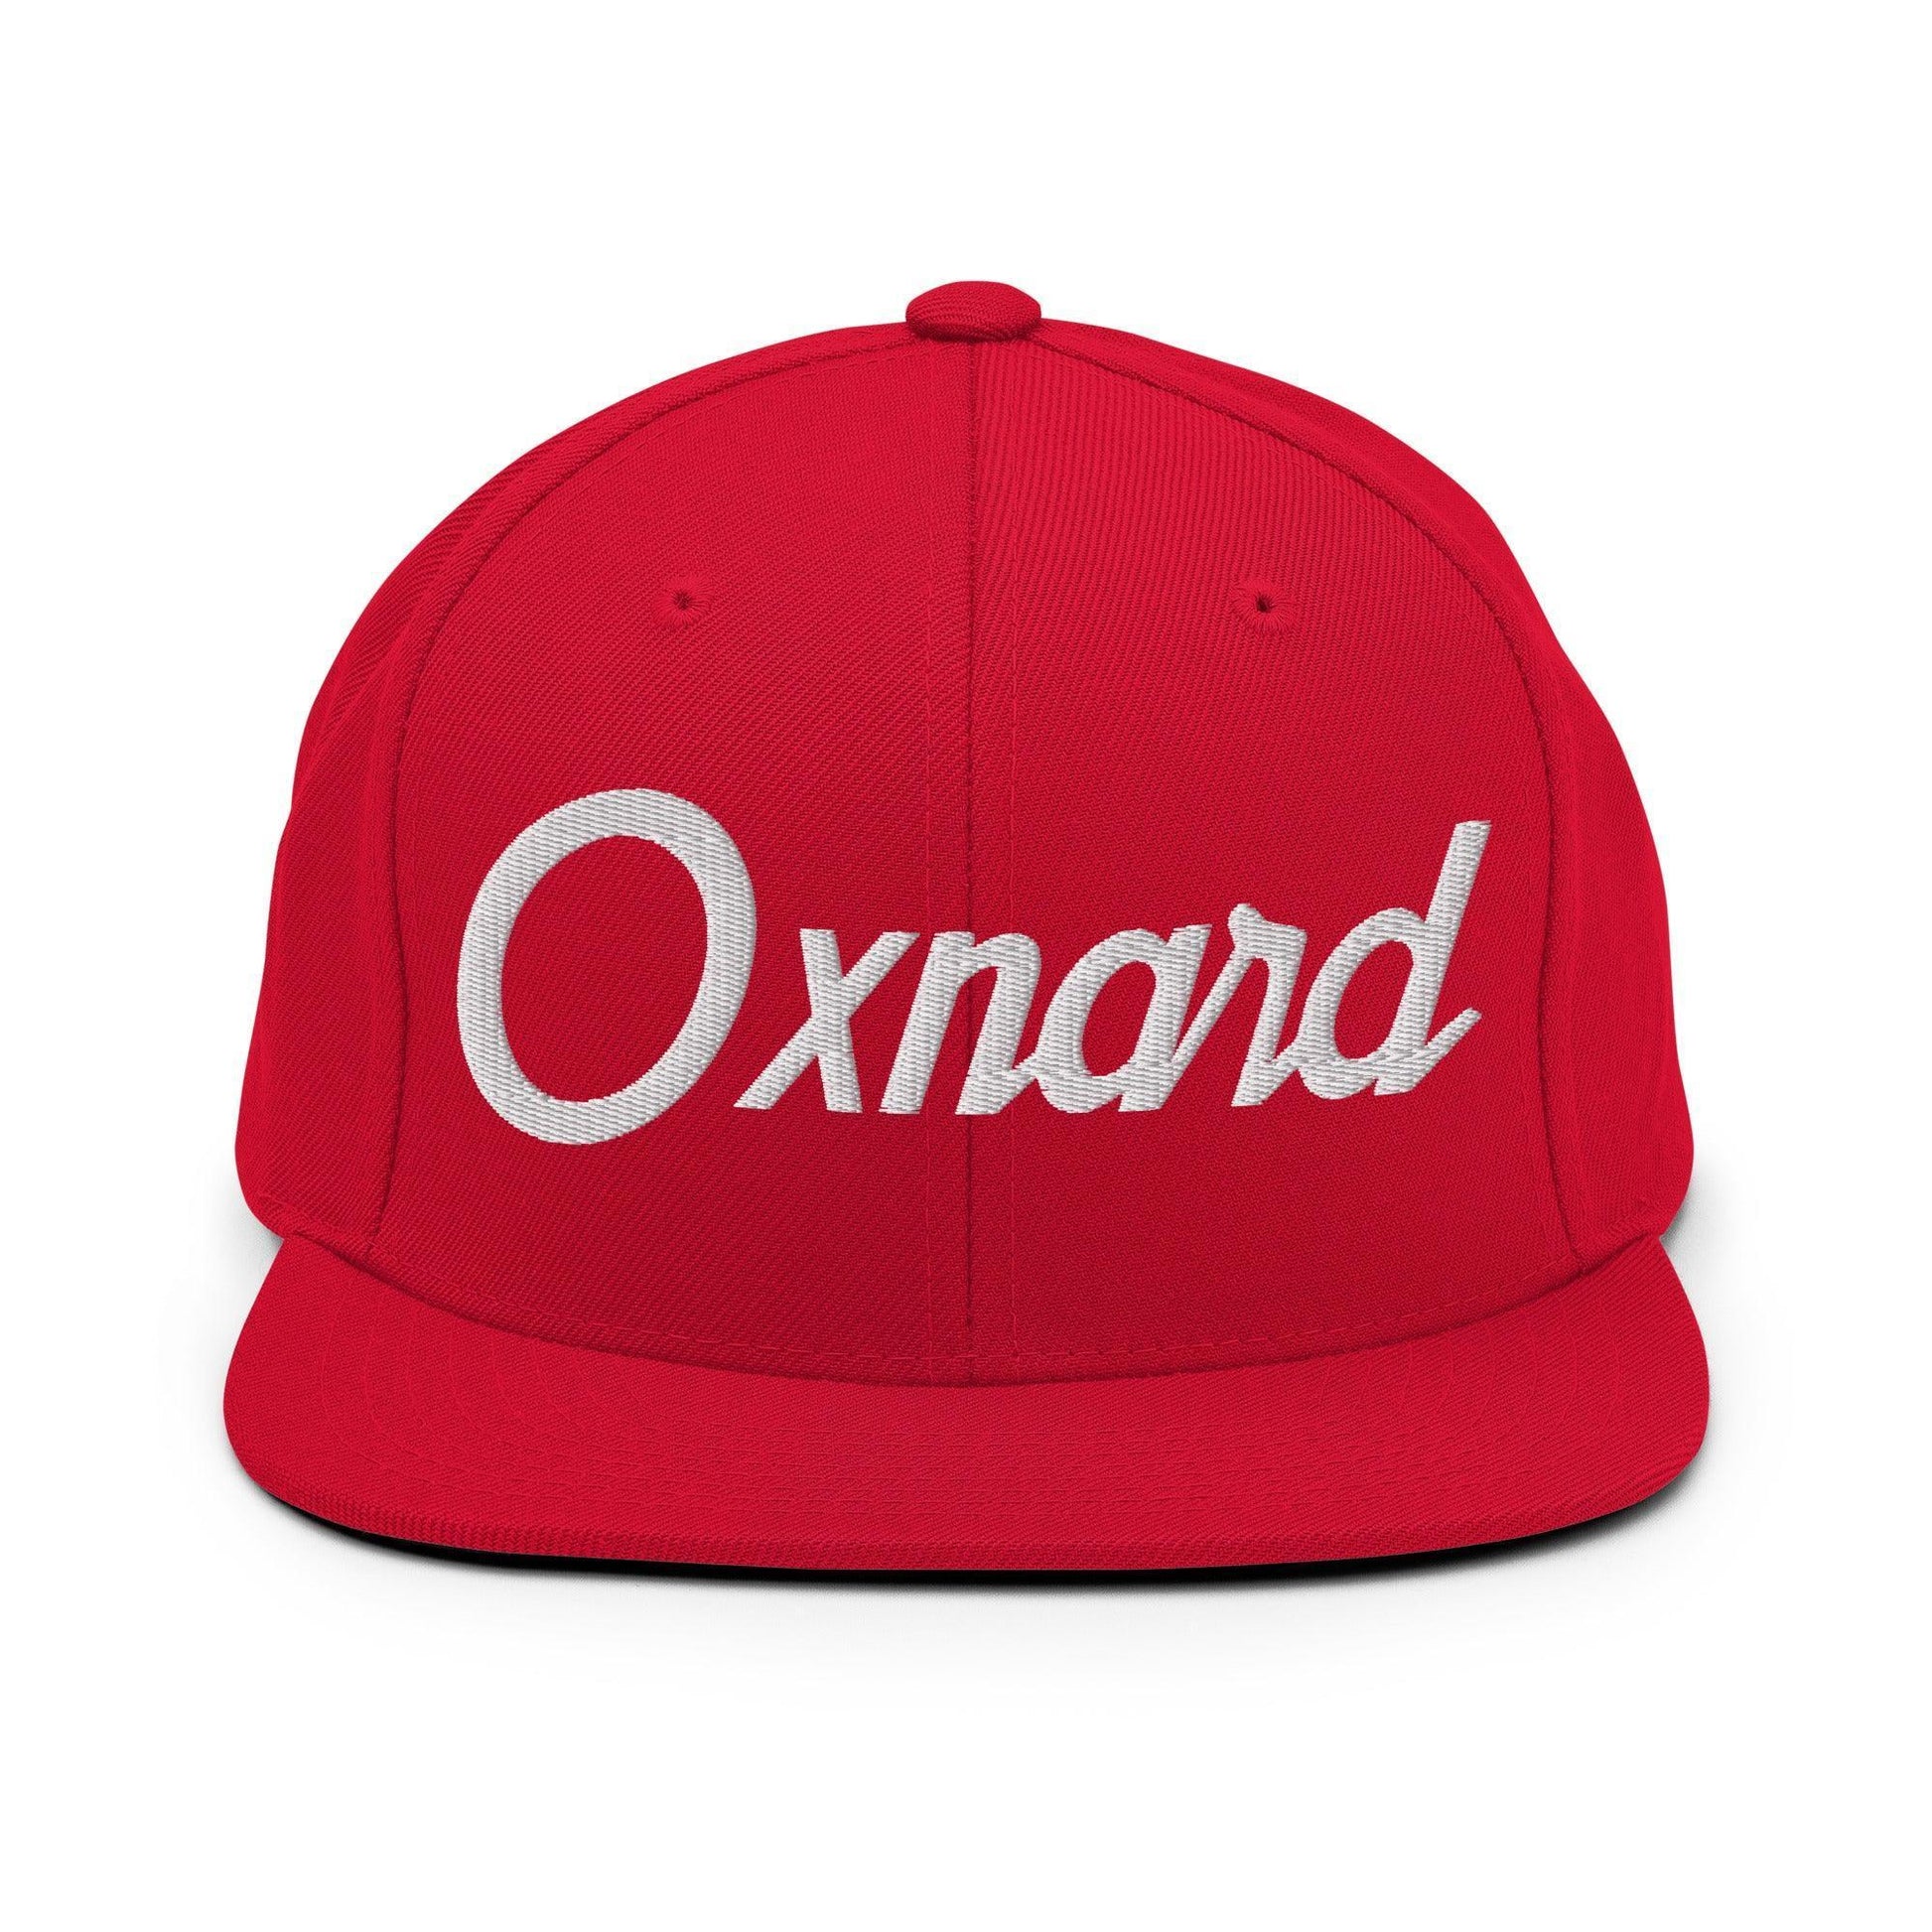 Oxnard Script Snapback Hat Red